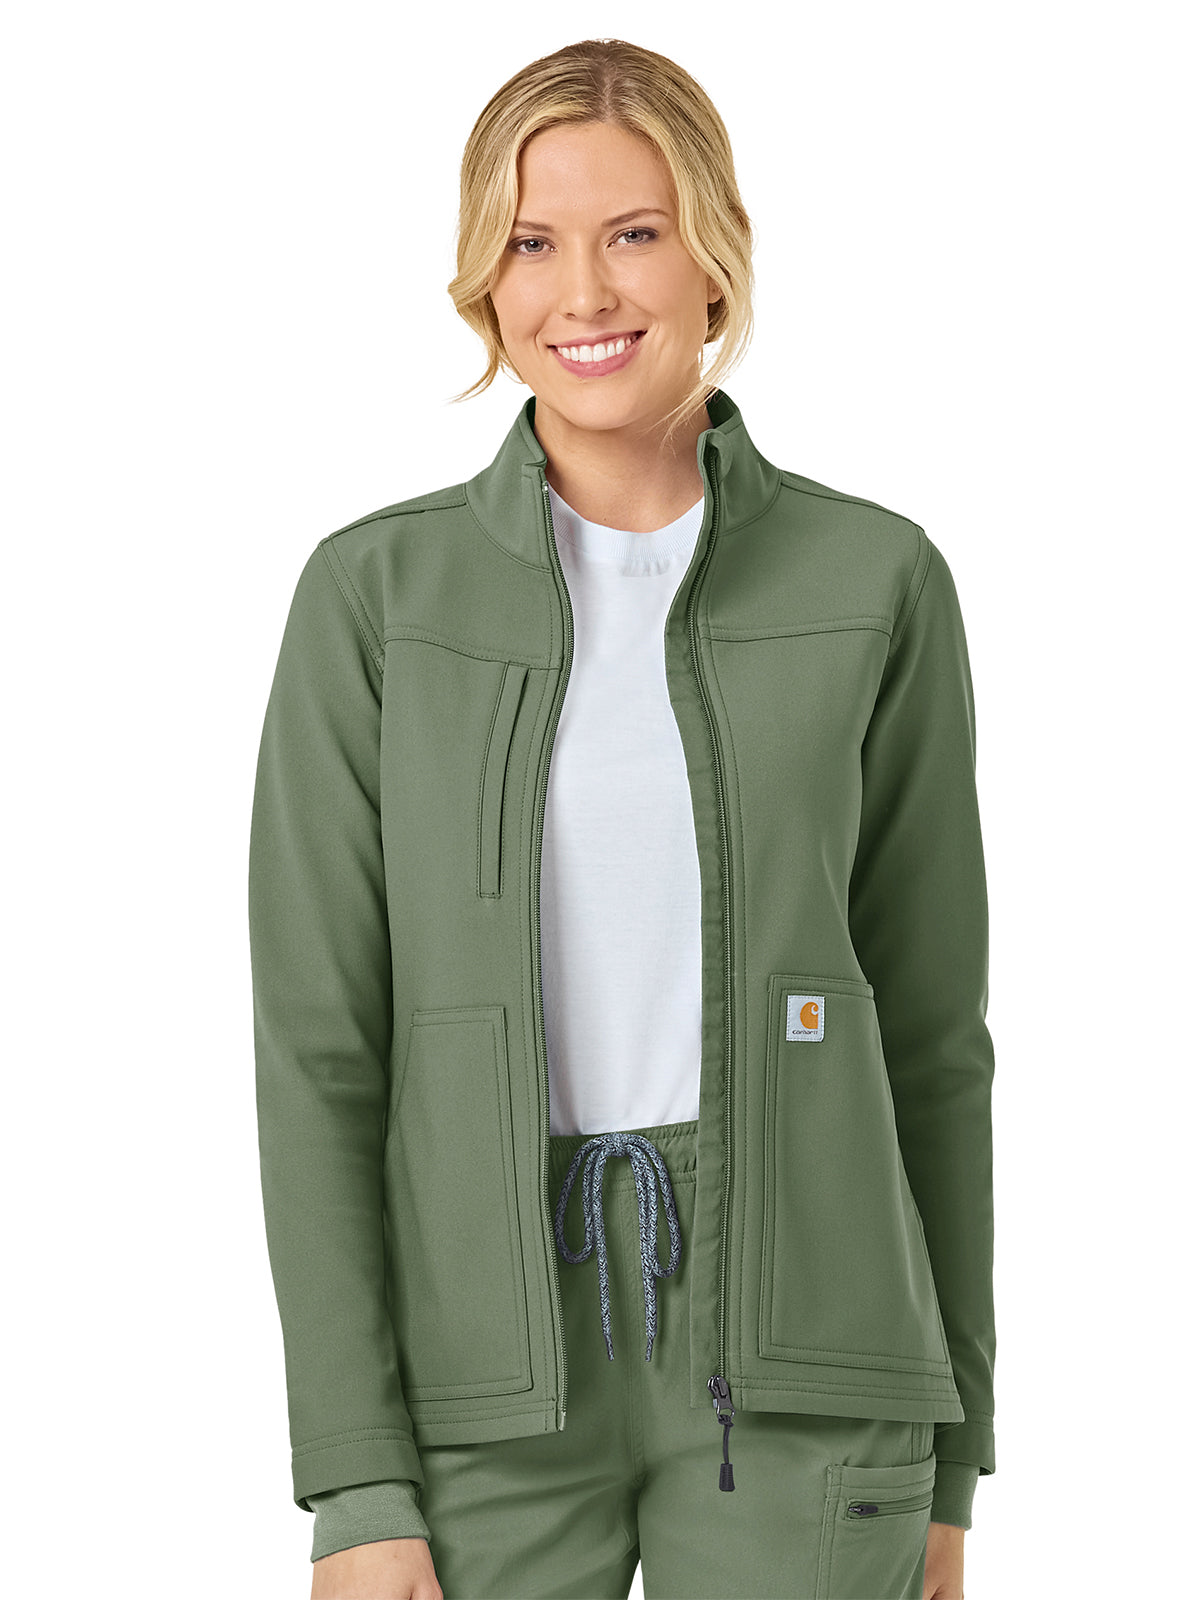 Women's Bonded Fleece Jacket - C81023 - Olive